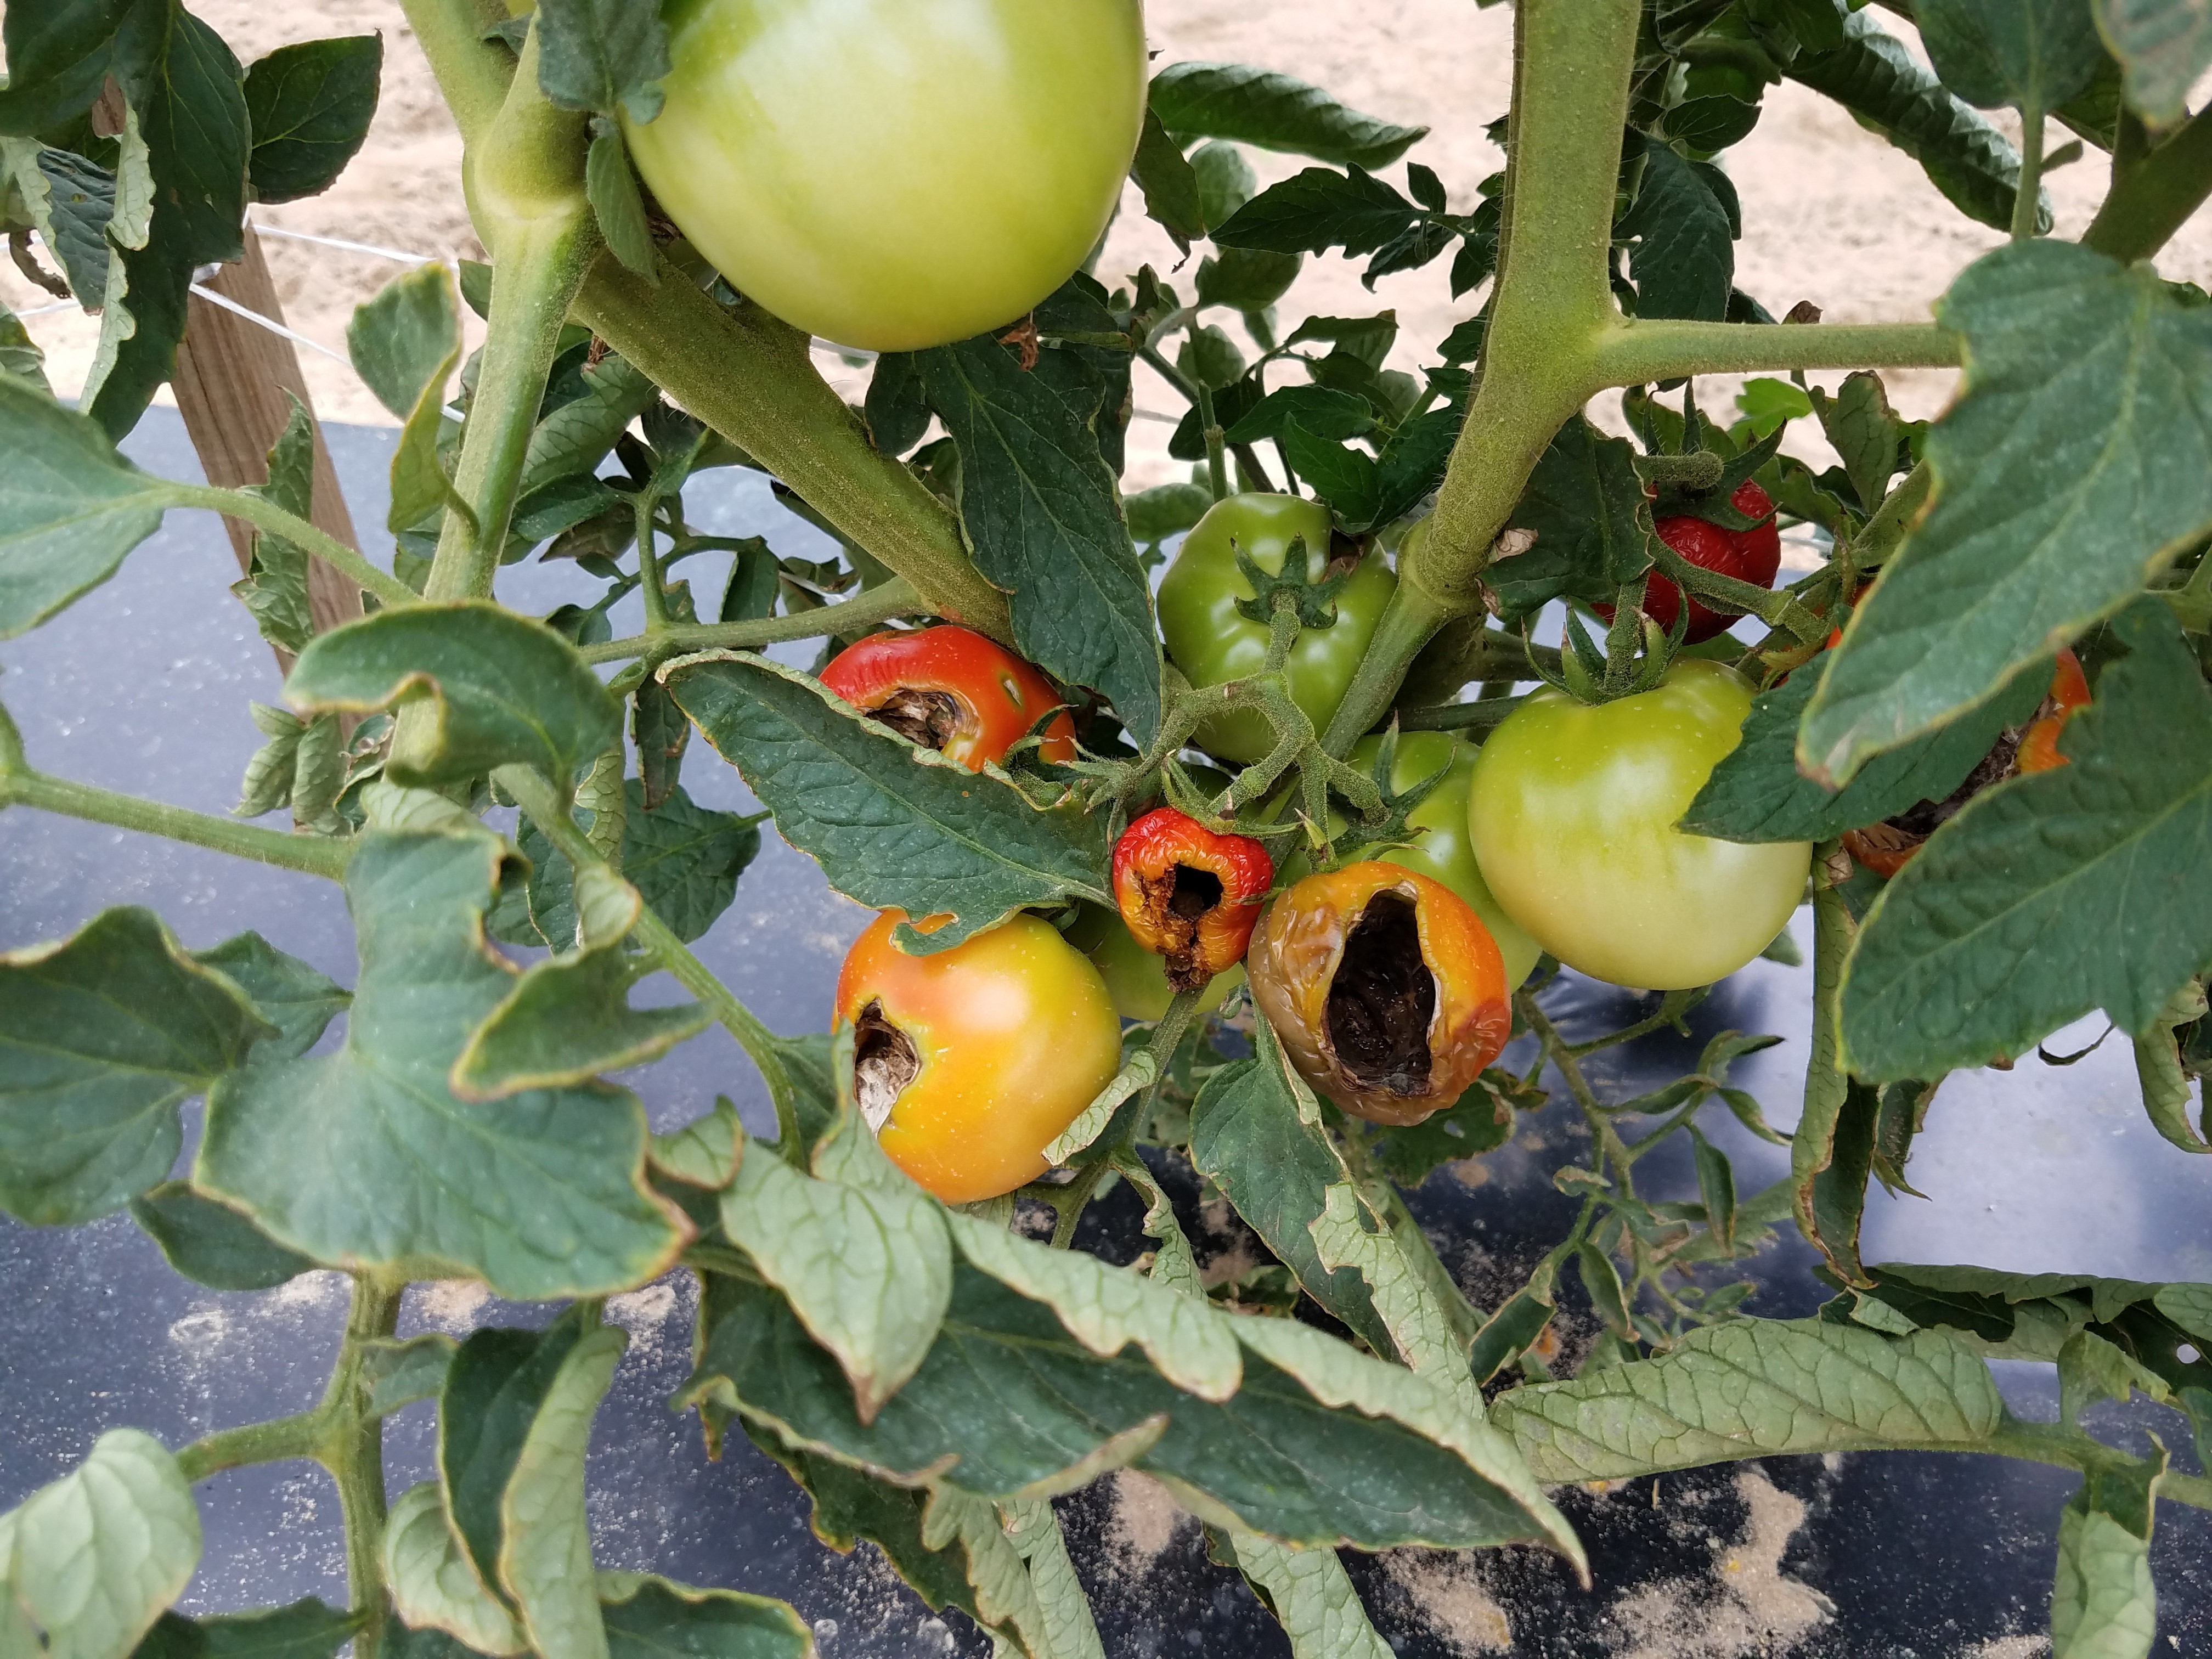 Crow damage on tomato